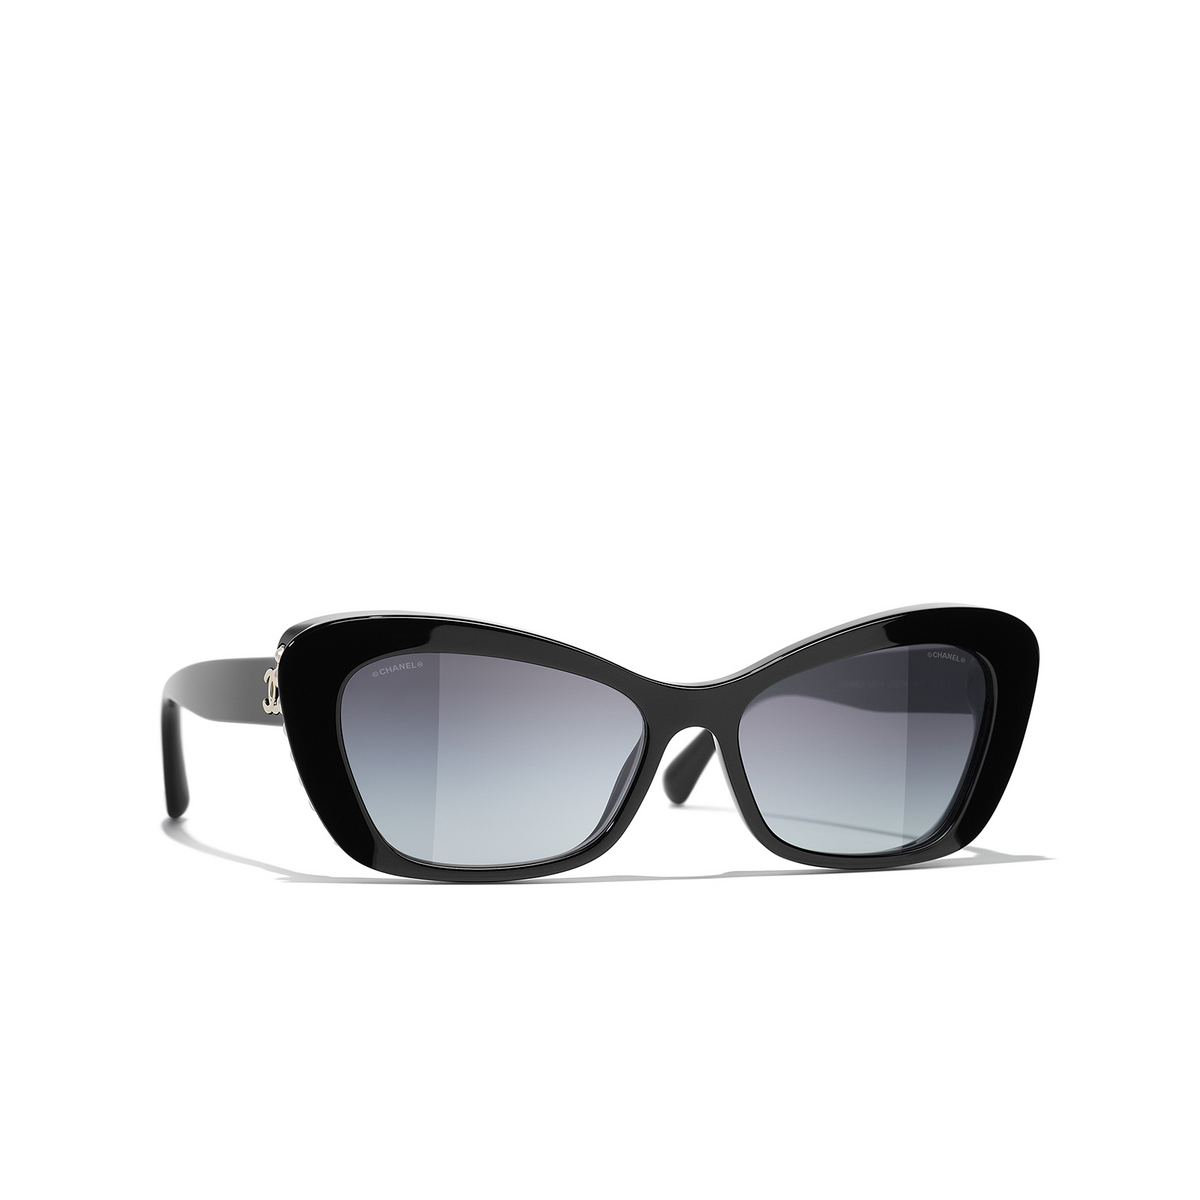 CHANEL cateye Sunglasses C622S6 Black & Gold - three-quarters view